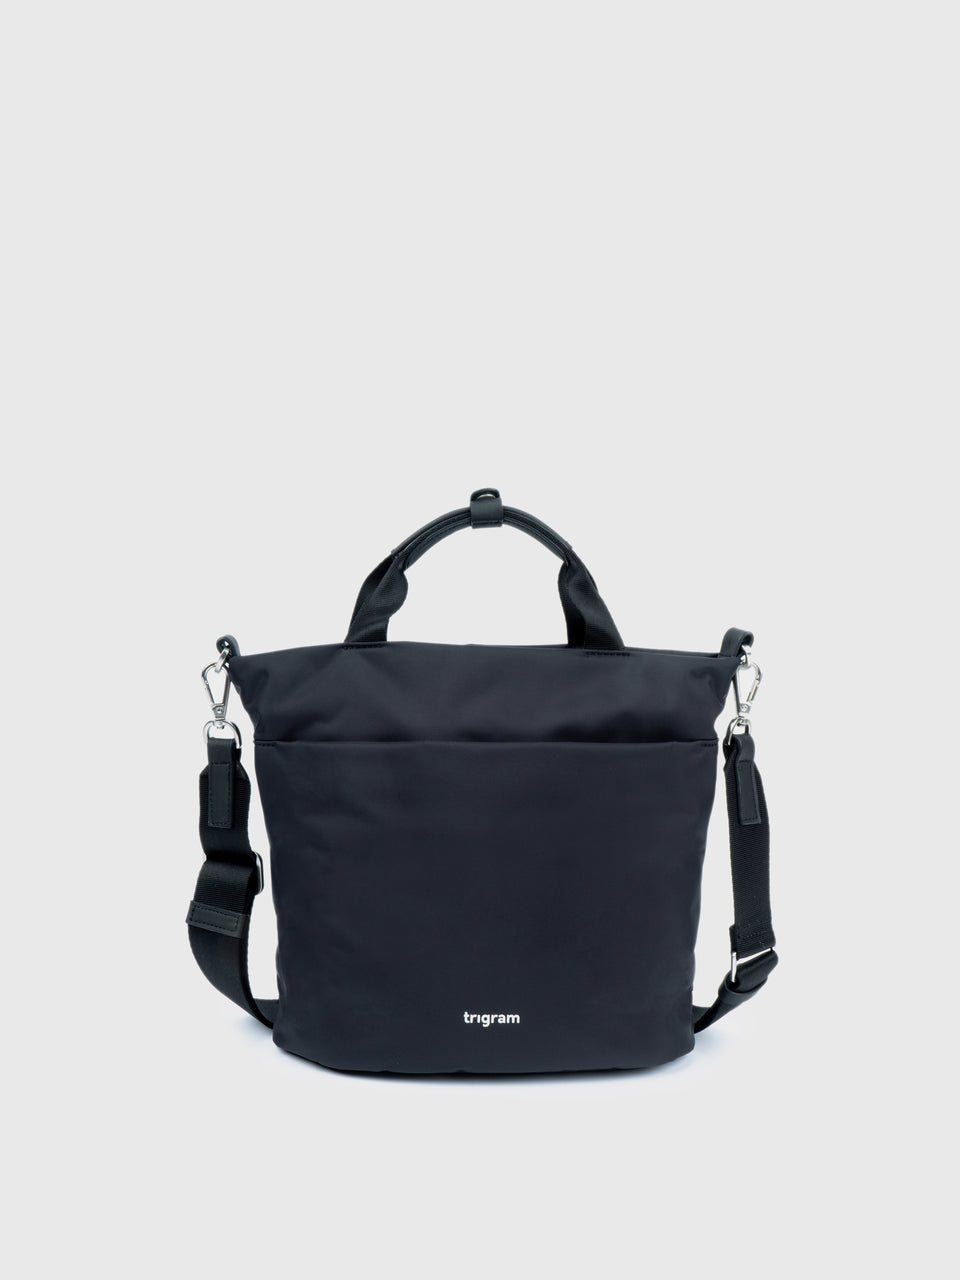 Bucket Bag - Charcoal Black